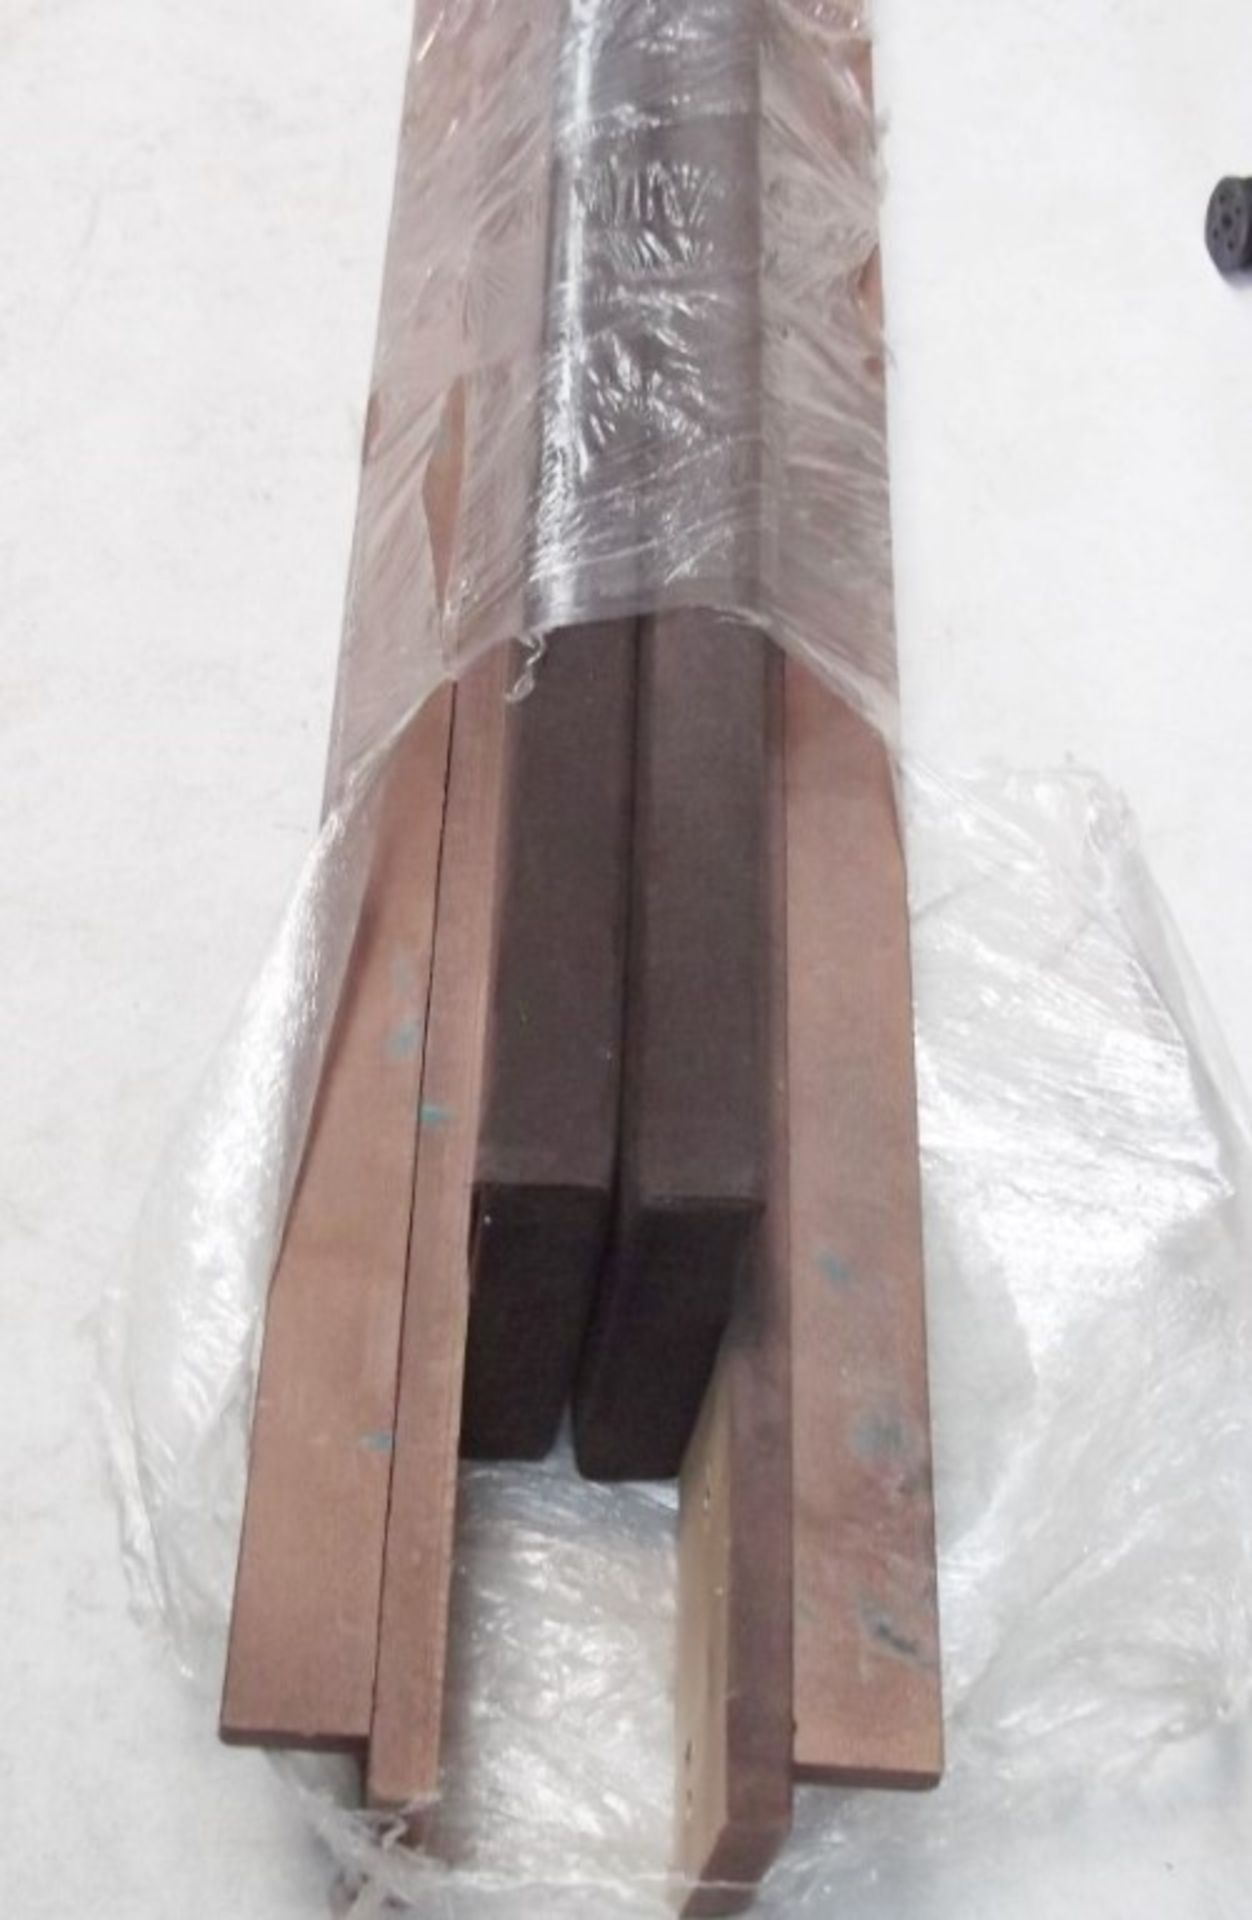 1 x MARRAM Lysander Bed - Super Kingsize: 180 x 200cm - Colour: Chocolate & Mocha - Ref: 3944557 - - Image 8 of 11